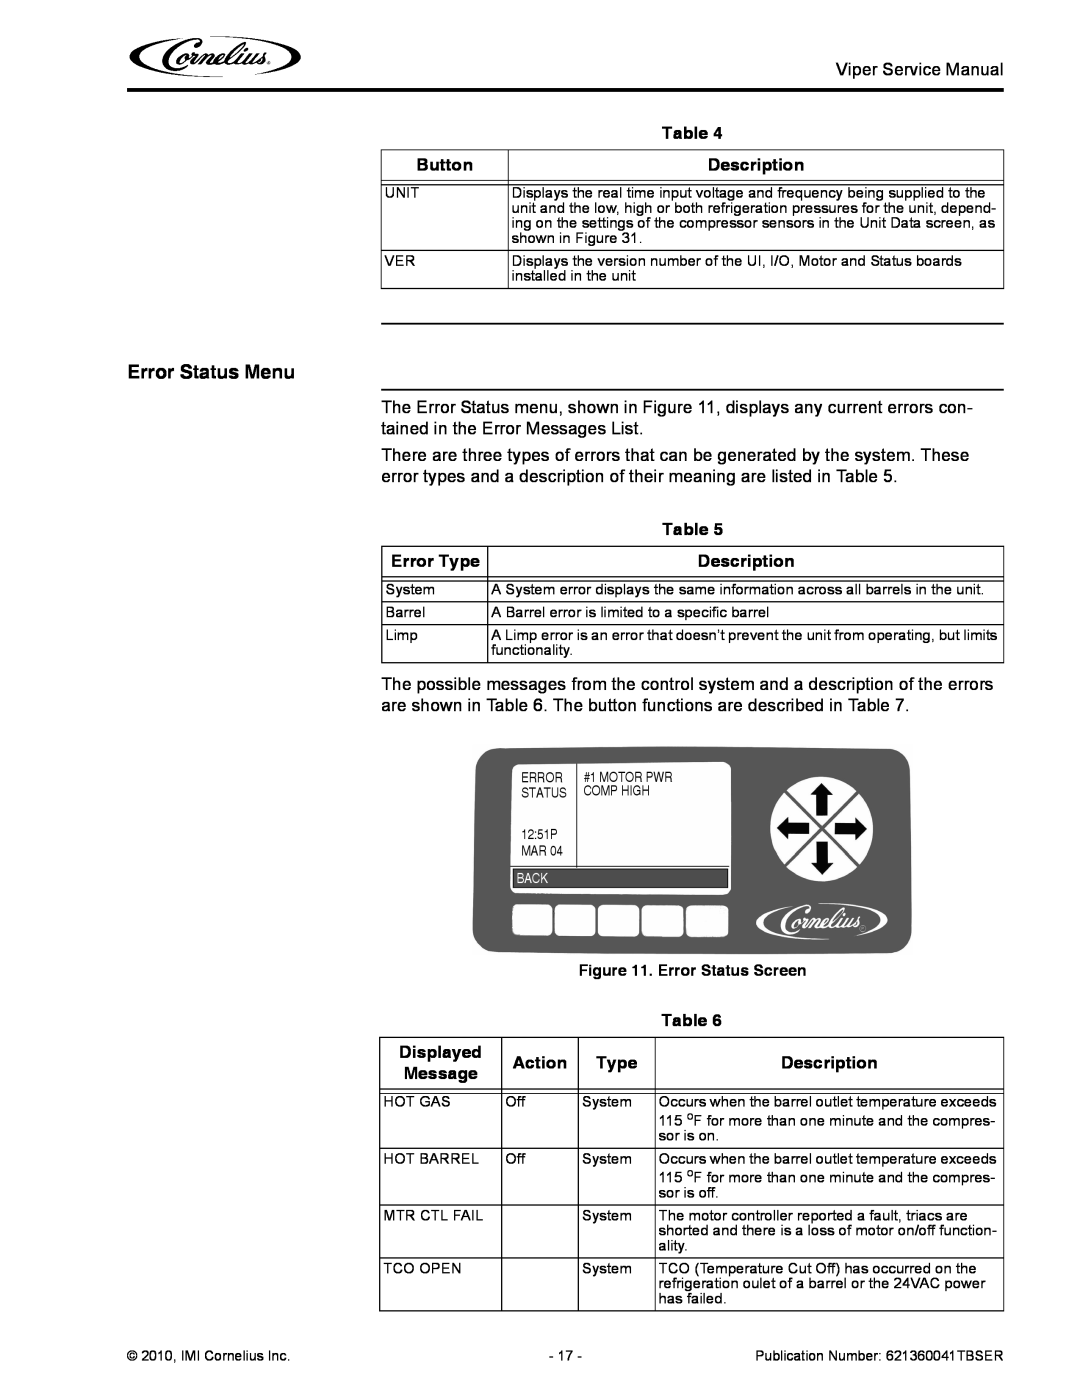 Cornelius 3 service manual Button, Description, Error Type, Displayed, Action, Message 